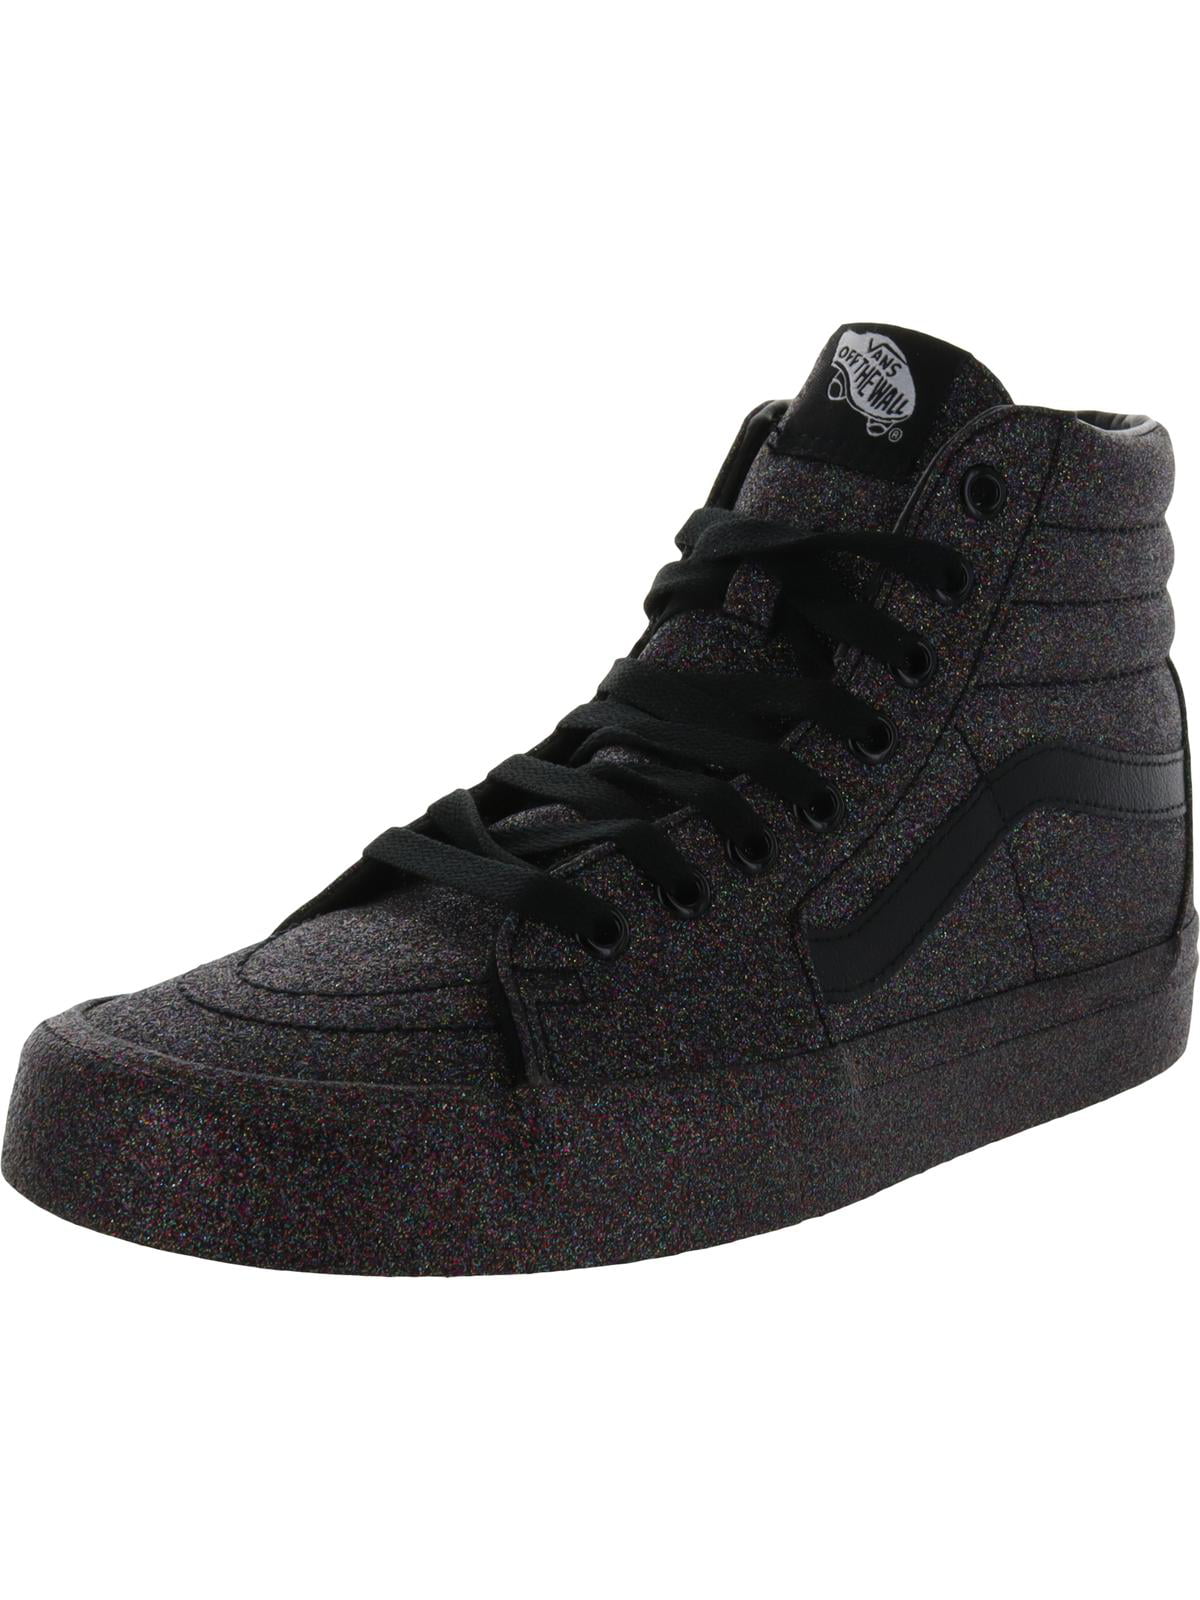 Vans SK8 Hi Women's Glitter High Top Lace-Up Skate Shoes Black Size 9 -  